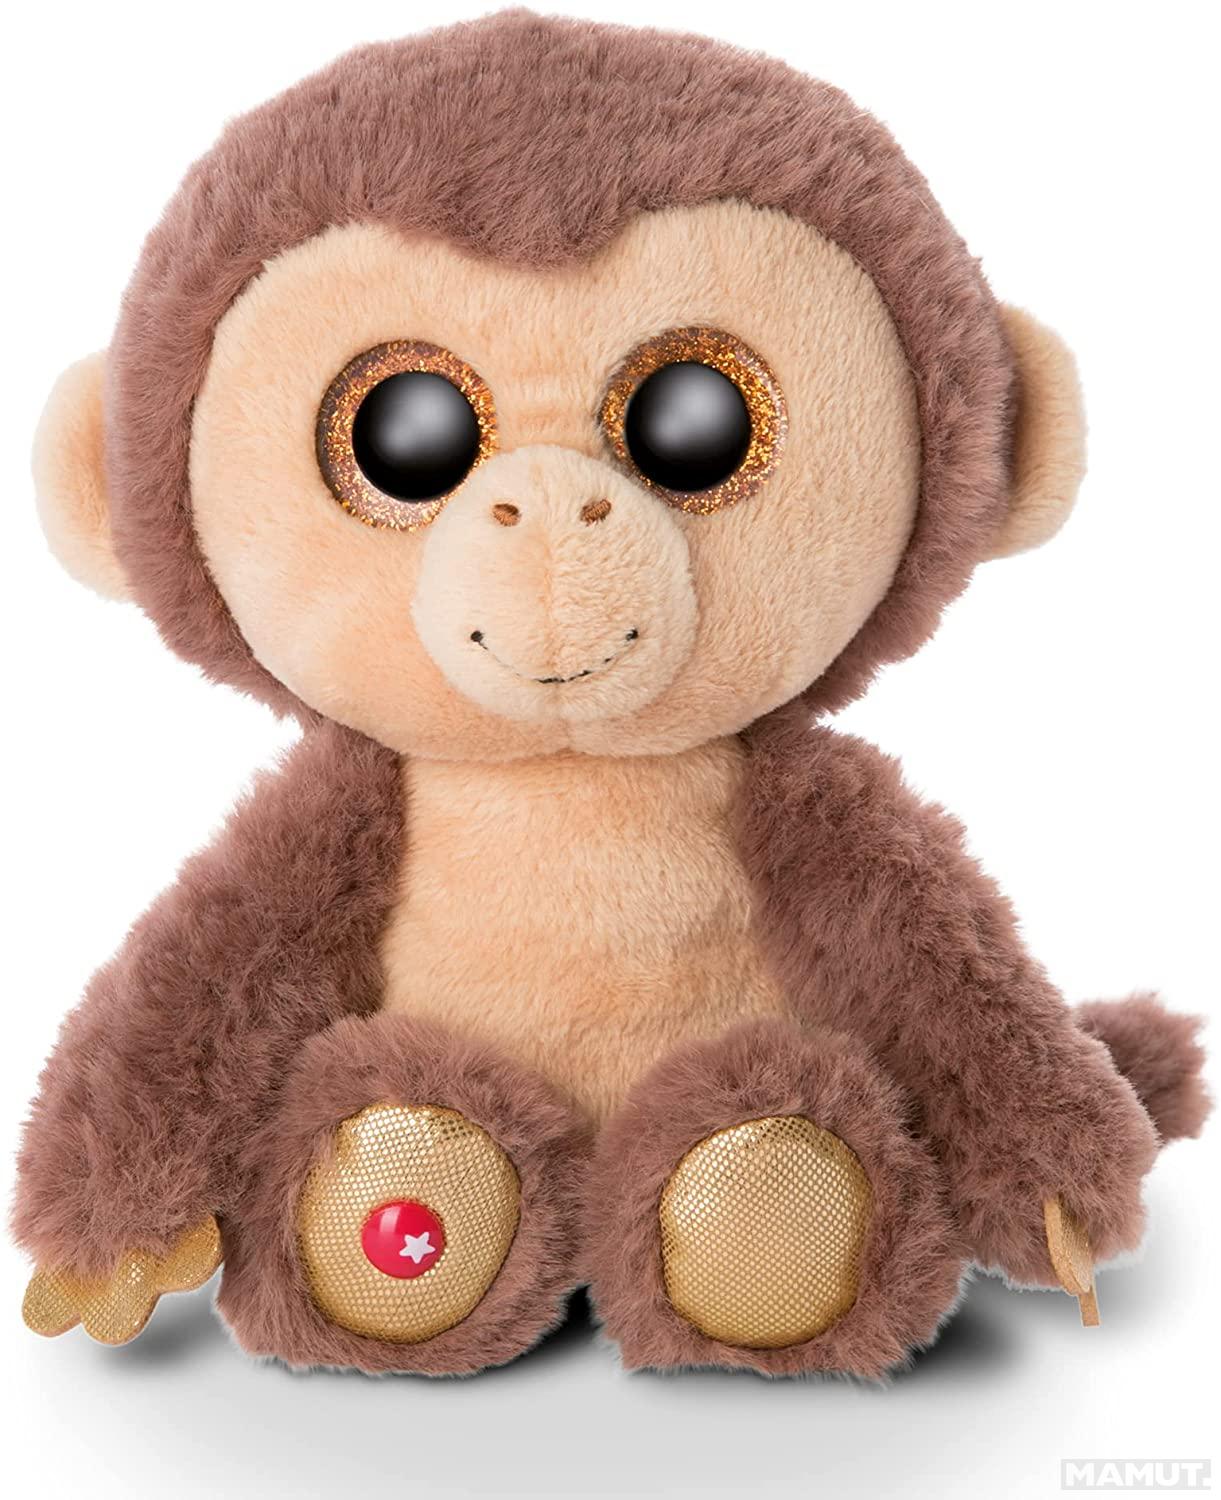 Plišana igračka GLUBSCHIS Monkey Hobson 15 cm 